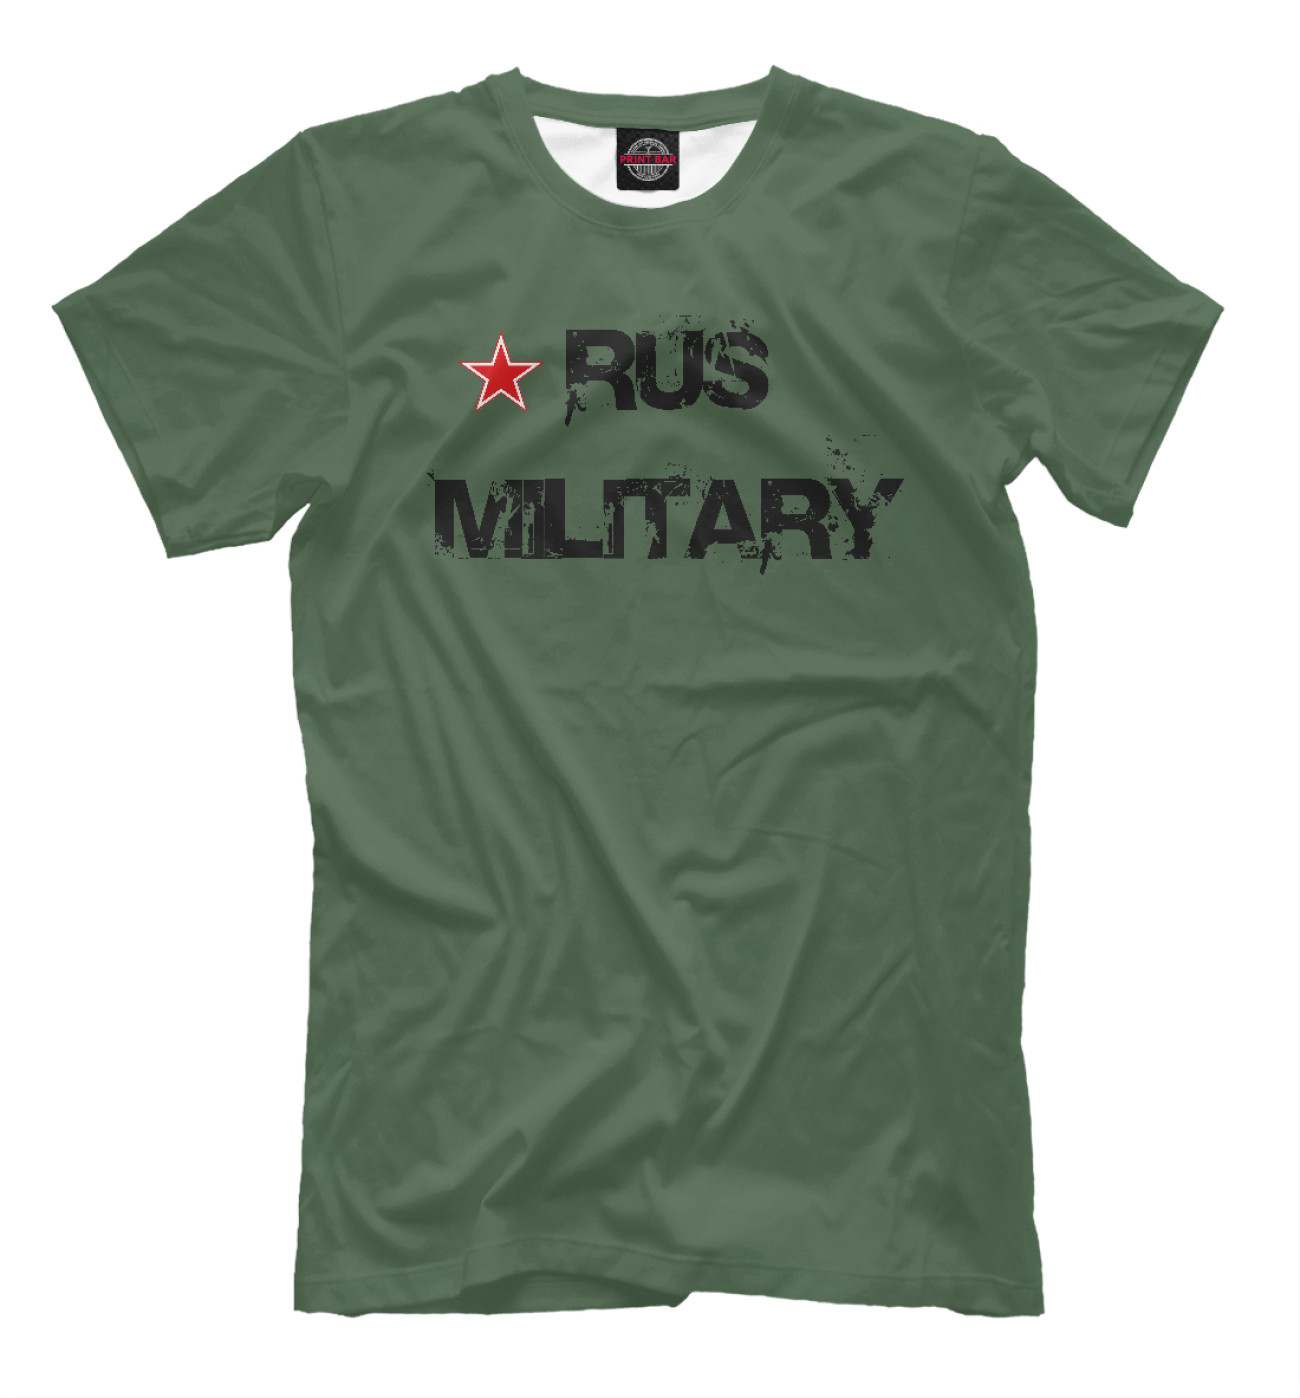 Мужская Футболка Rus military, артикул: MIN-928488-fut-2